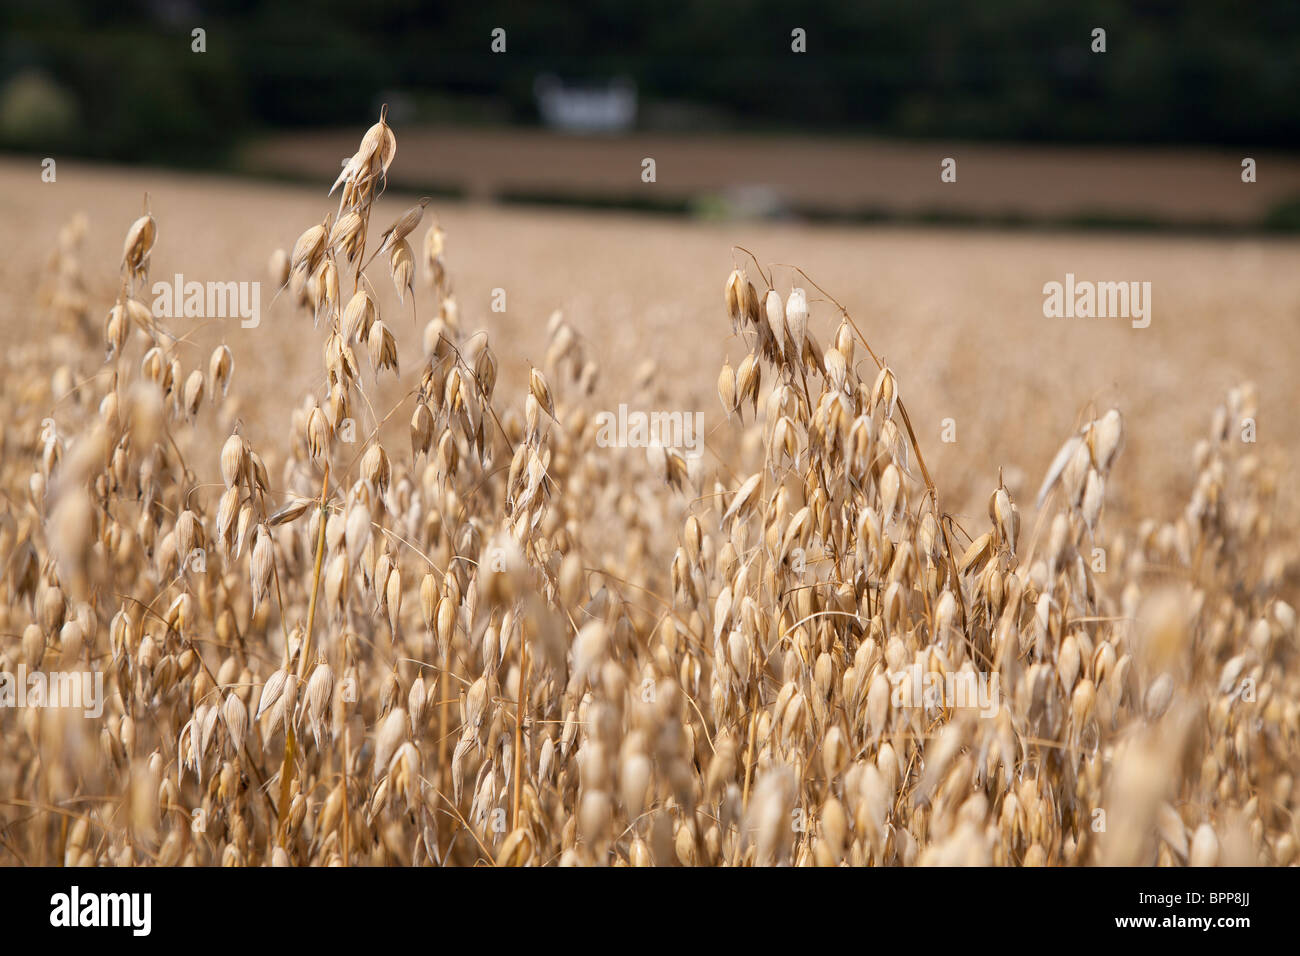 Hafer reif für die Ernte im Feld in Gloucestershire, England UK  Stockfotografie - Alamy